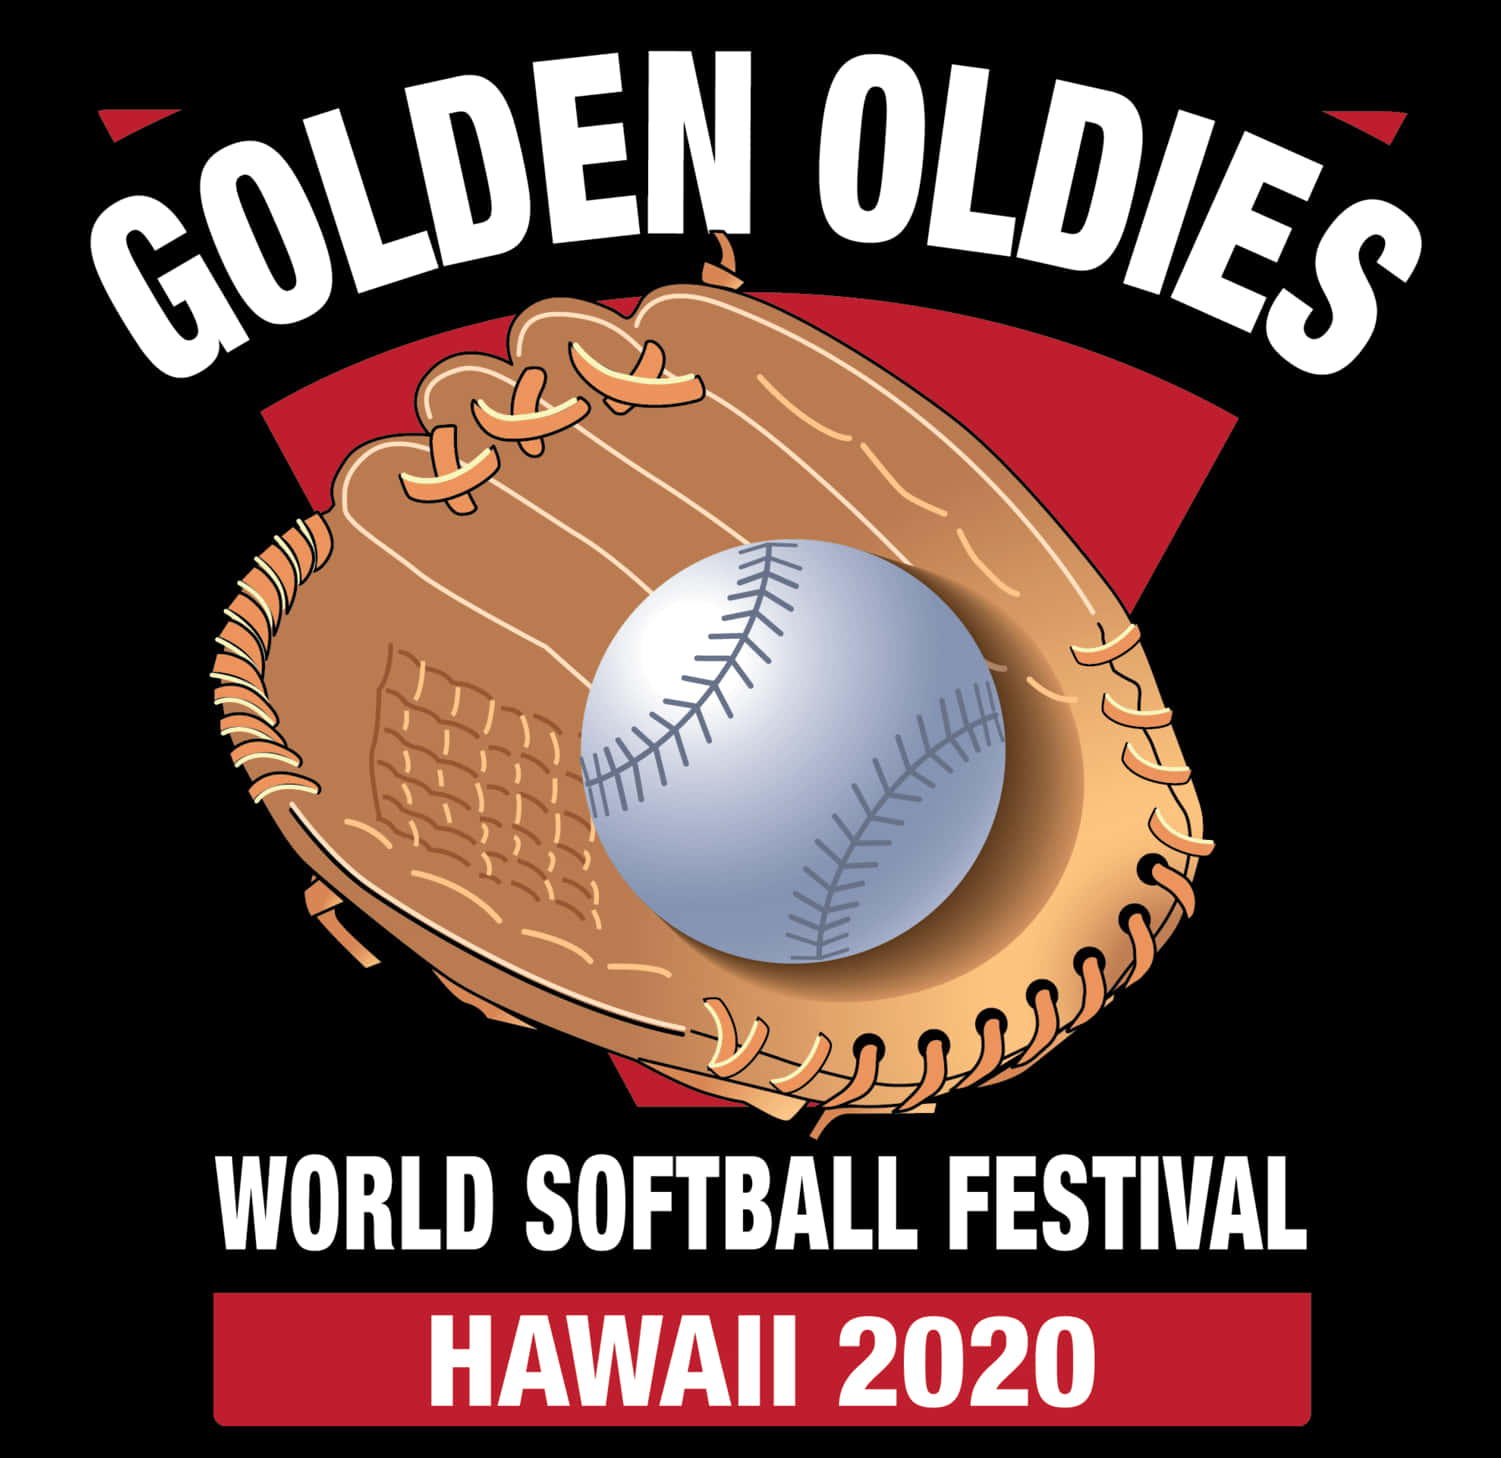 Golden Oldies World Softball Festival Hawaii2020 Logo PNG image